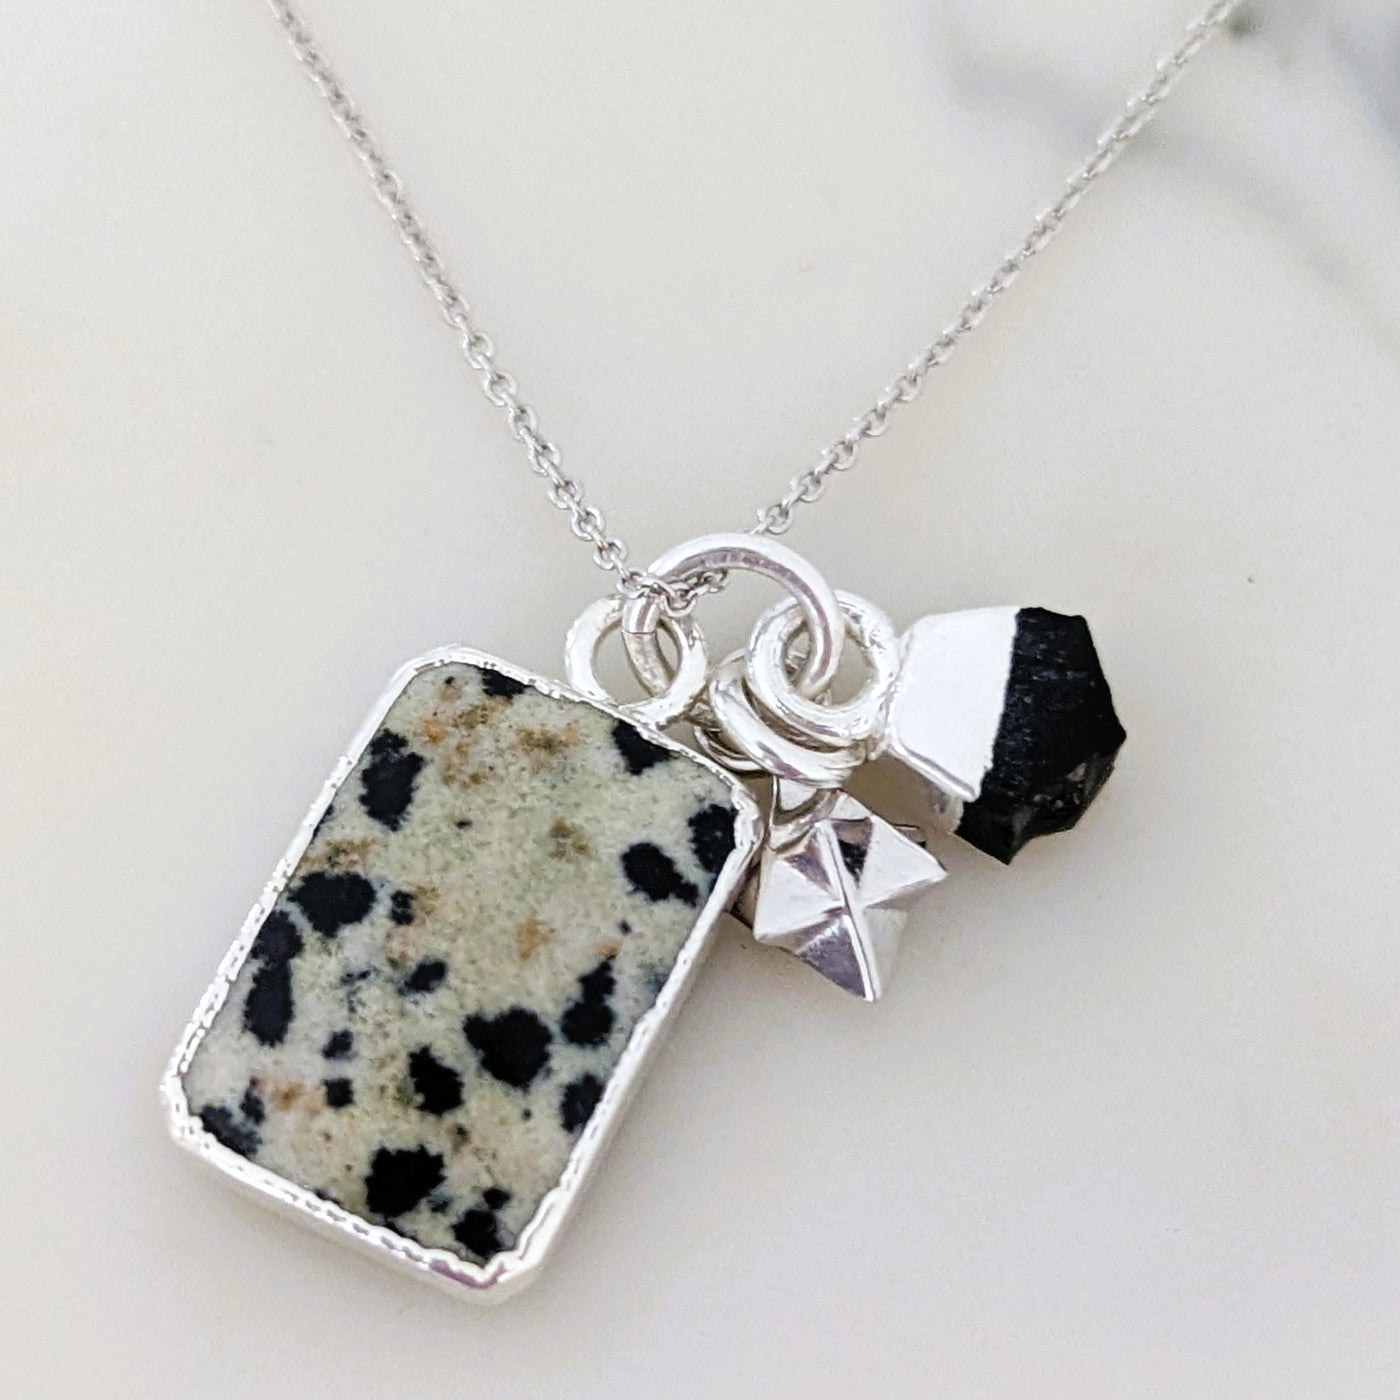 Dalmatian Jasper, Black Onyx and tetrahedron charm silver pendant necklace